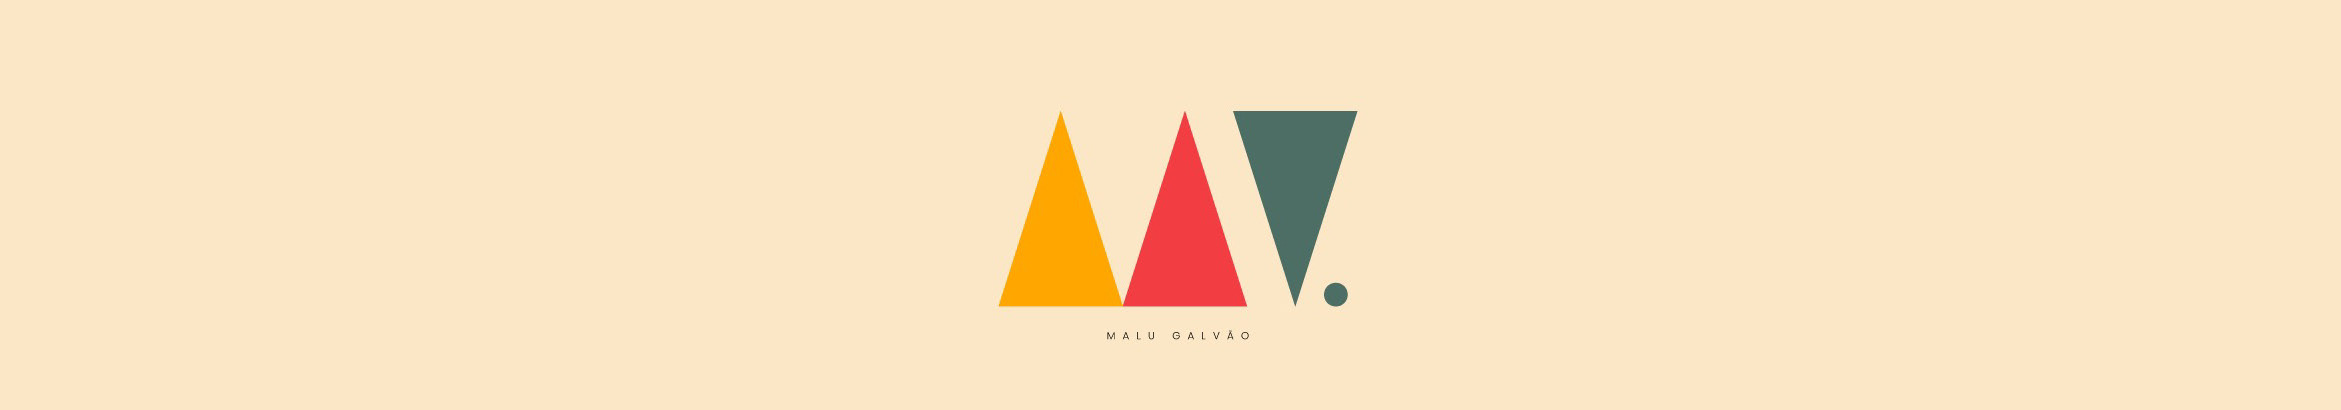 Malu Galvão's profile banner